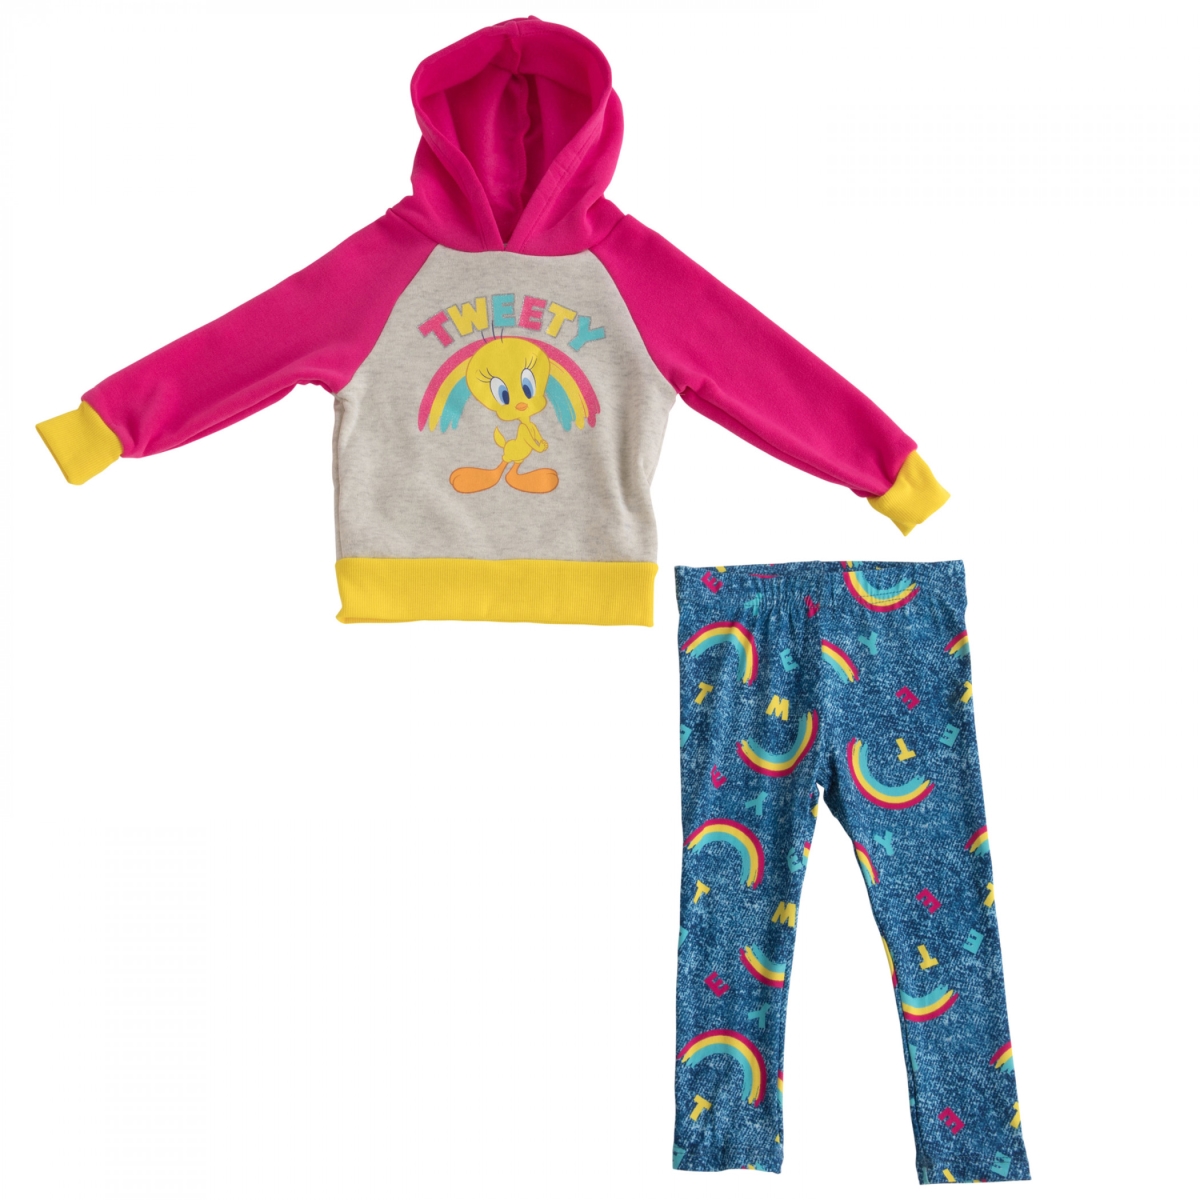 Picture of Looney Tunes 850072-toddler4t Looney Tunes Tweety Bird Rainbow Infant Fleece Jacket Set - Toddler 4T - 2 Piece